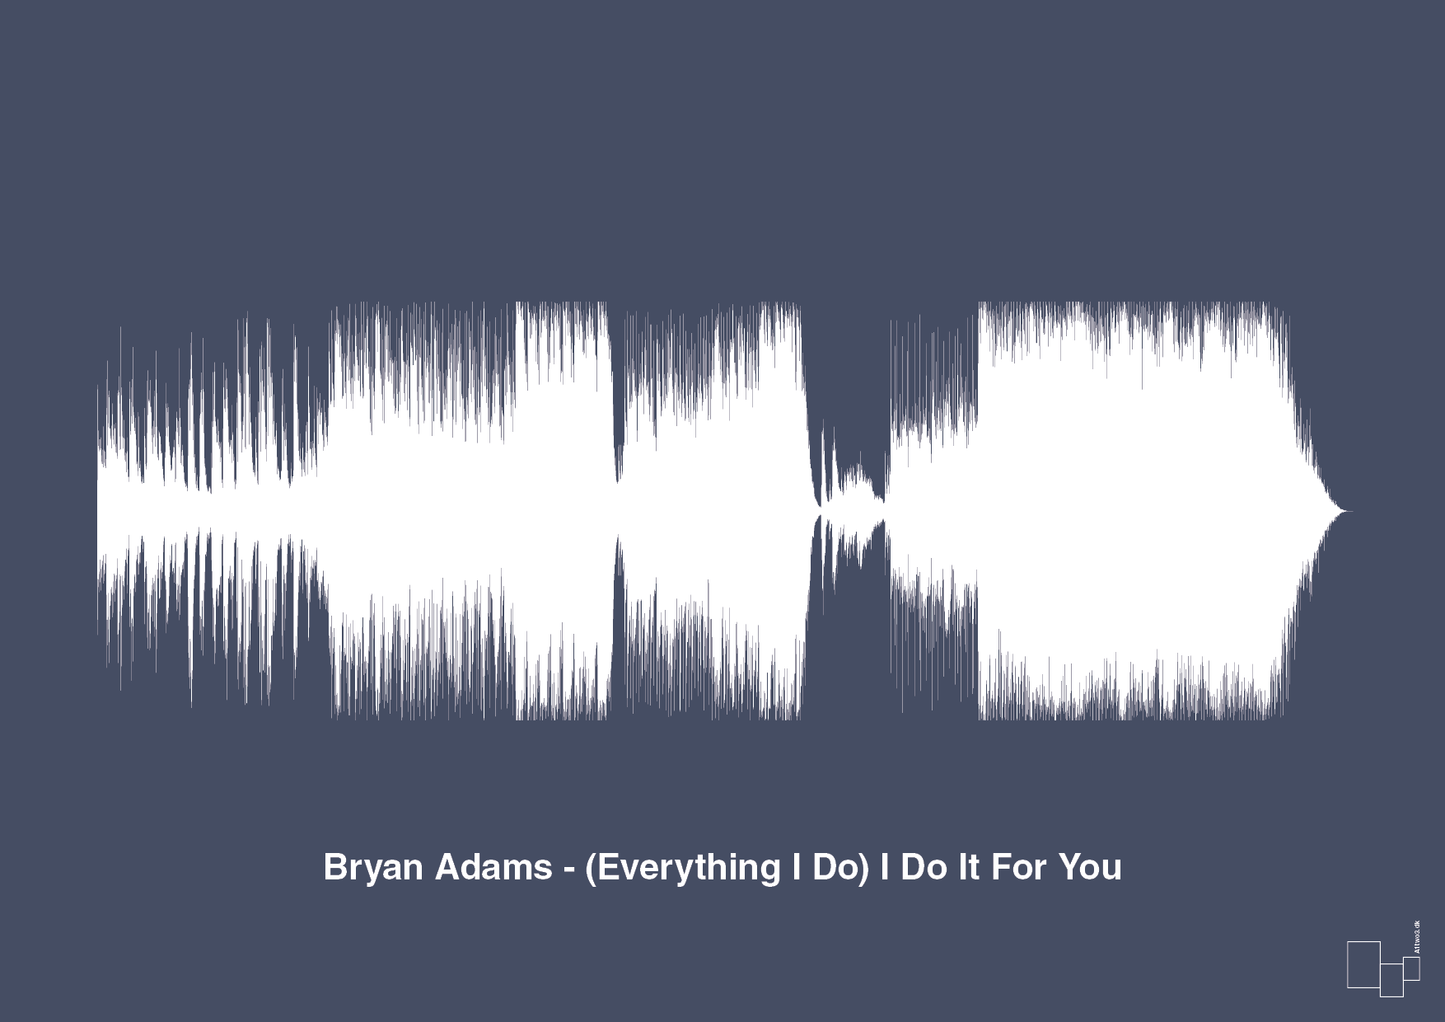 bryan adams - (everything i do) i do it for you - Plakat med Musik i Petrol